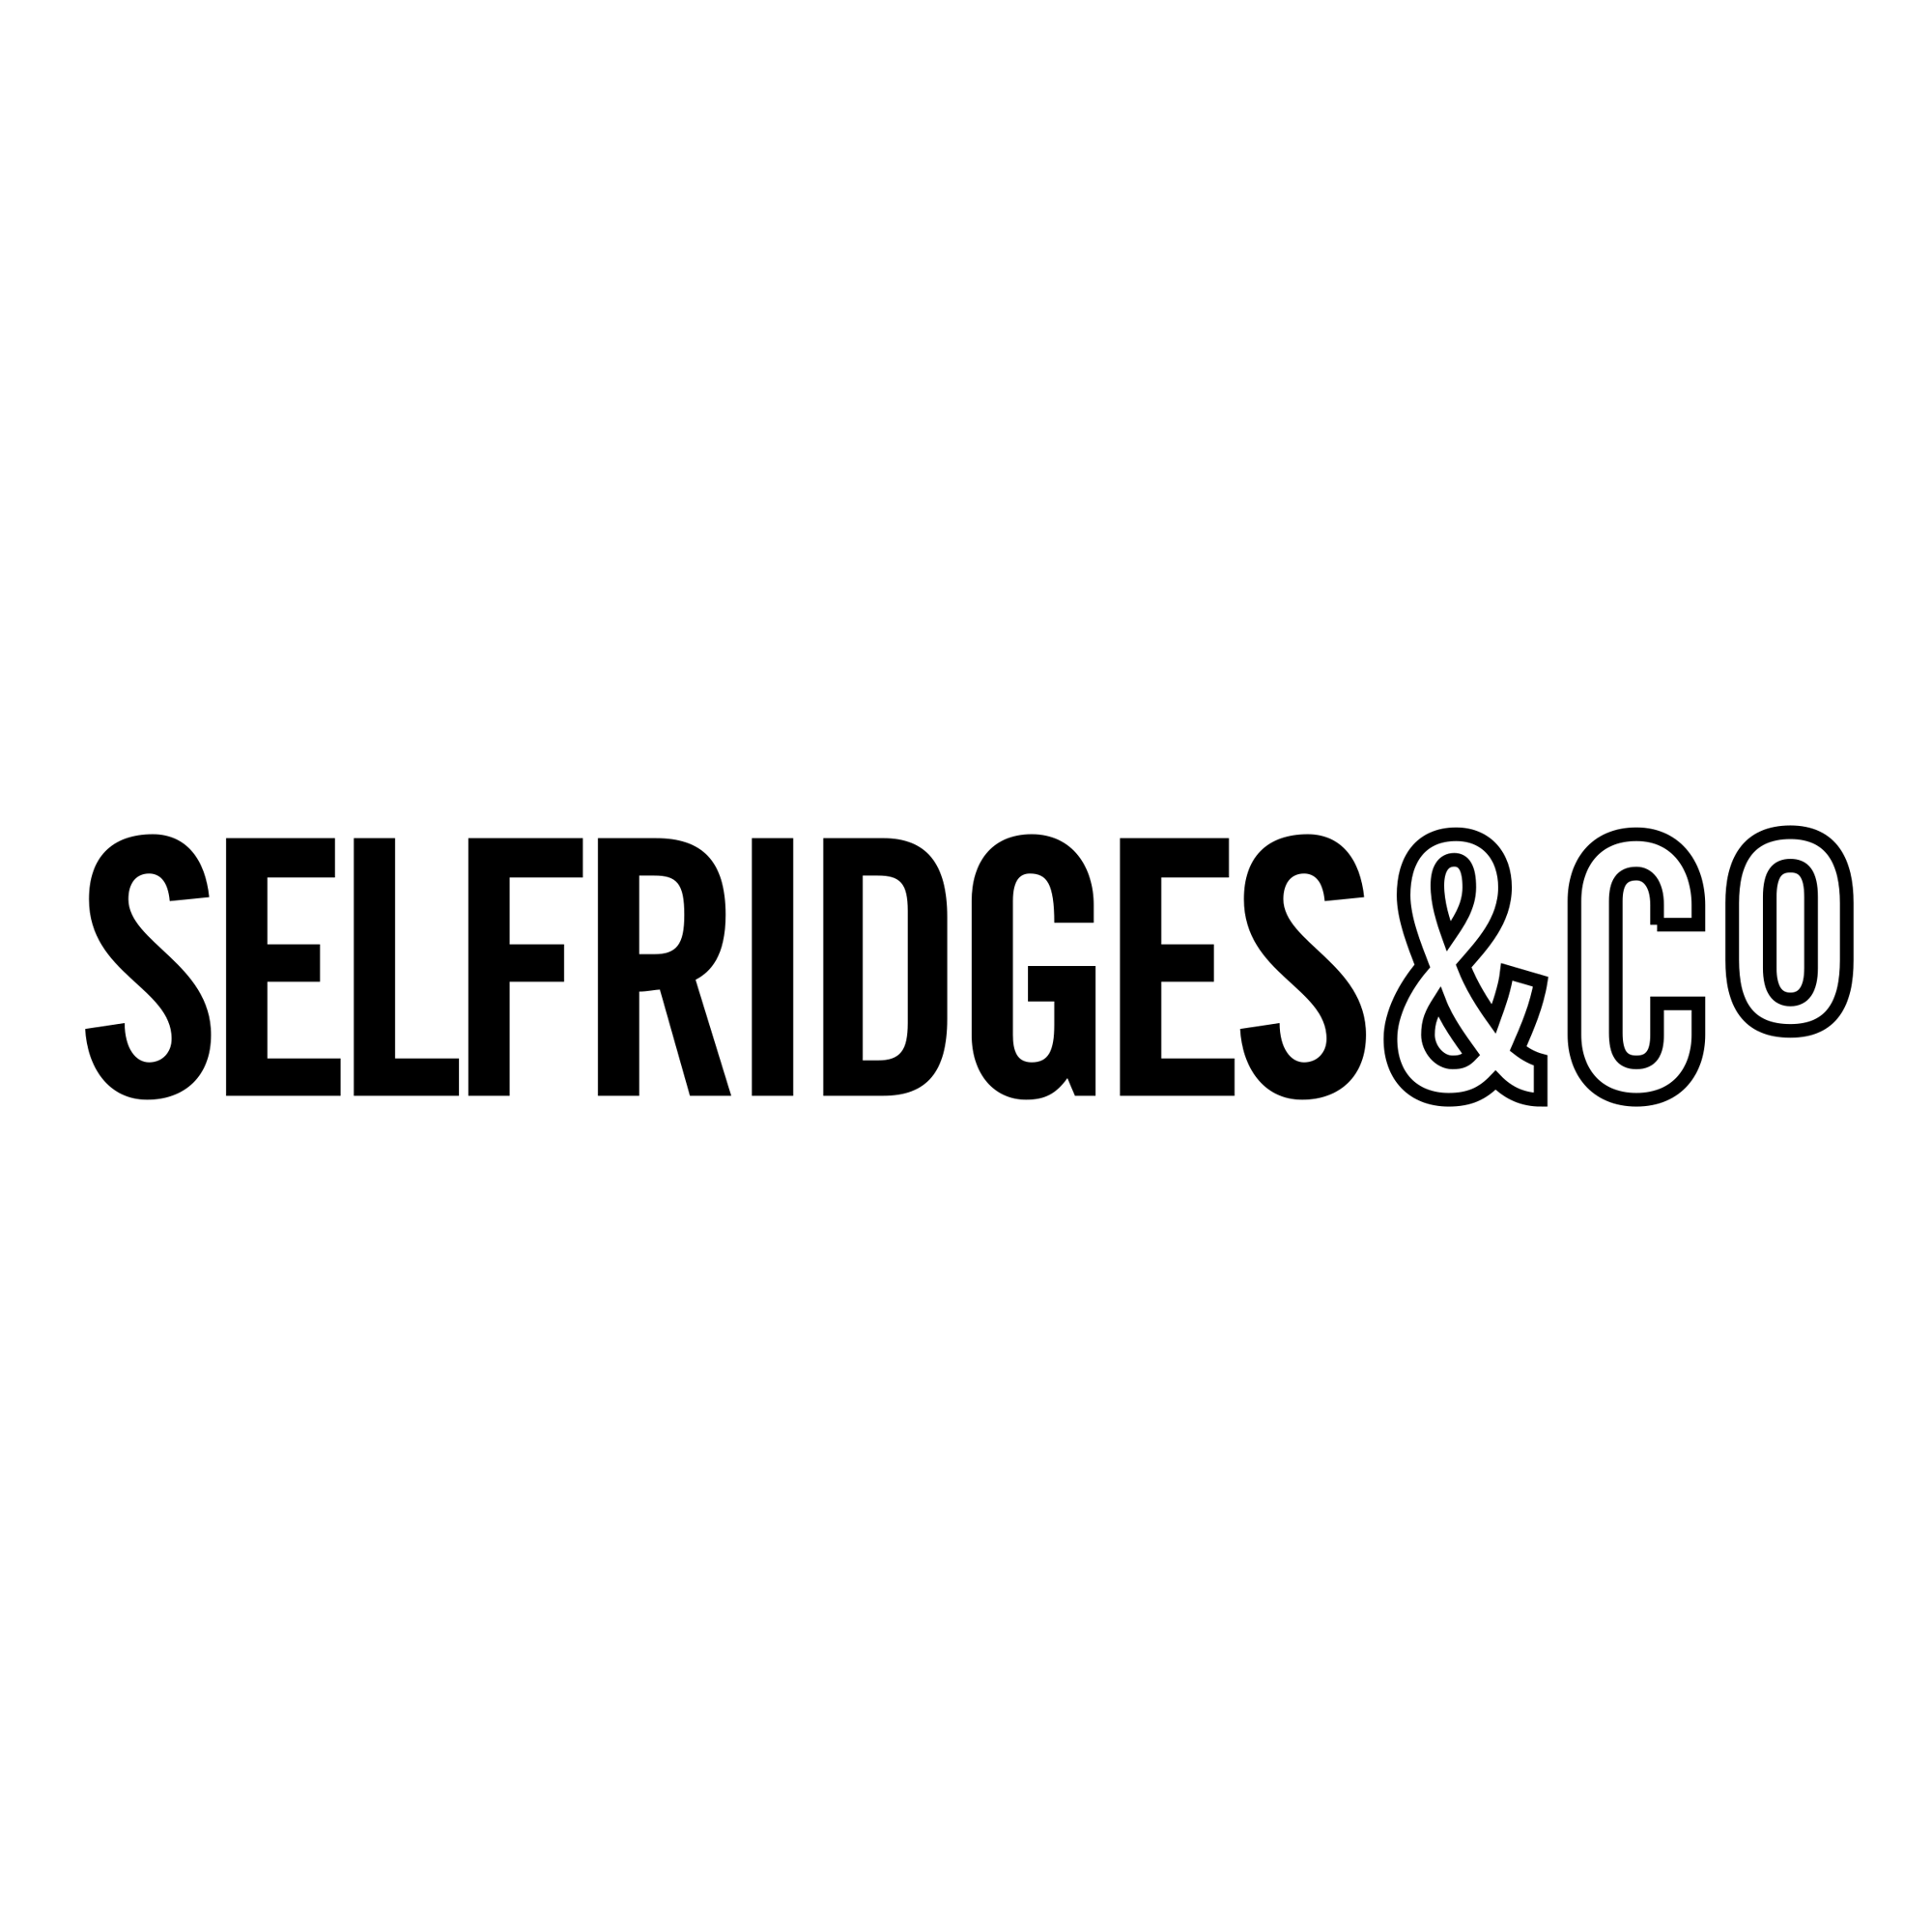 selfridges-co-1-logo-png-transparent